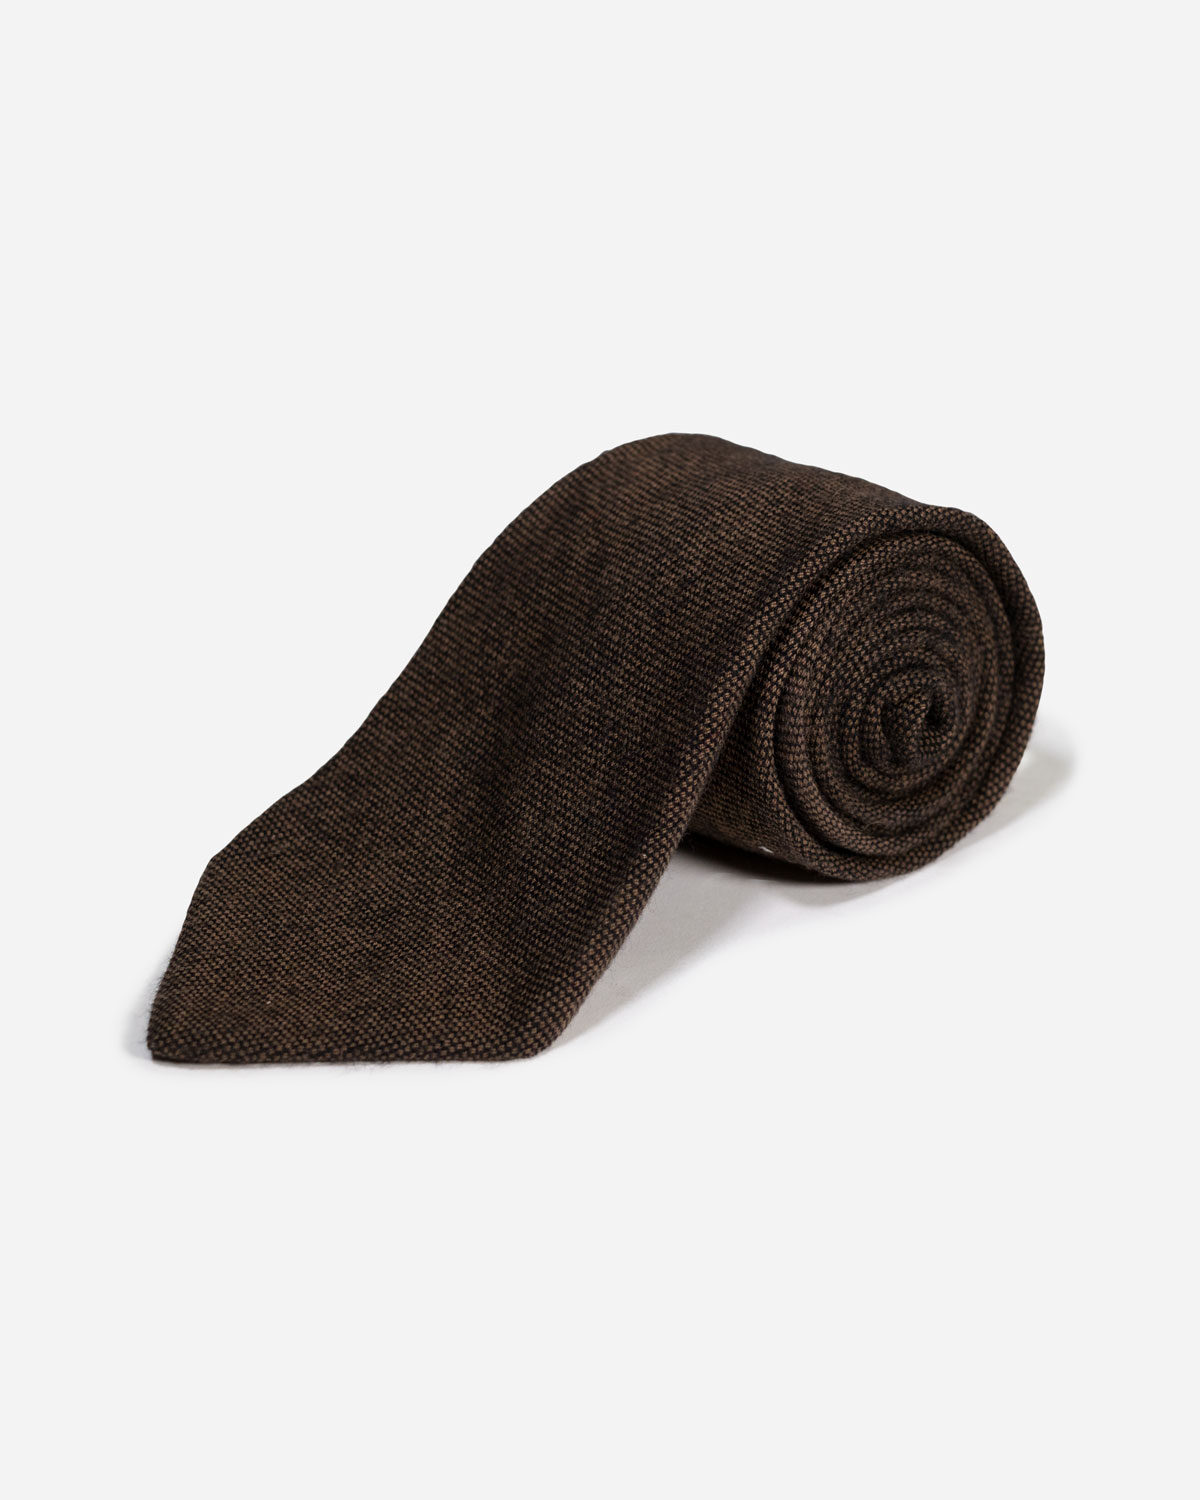 Marinella - Cravatta in lana